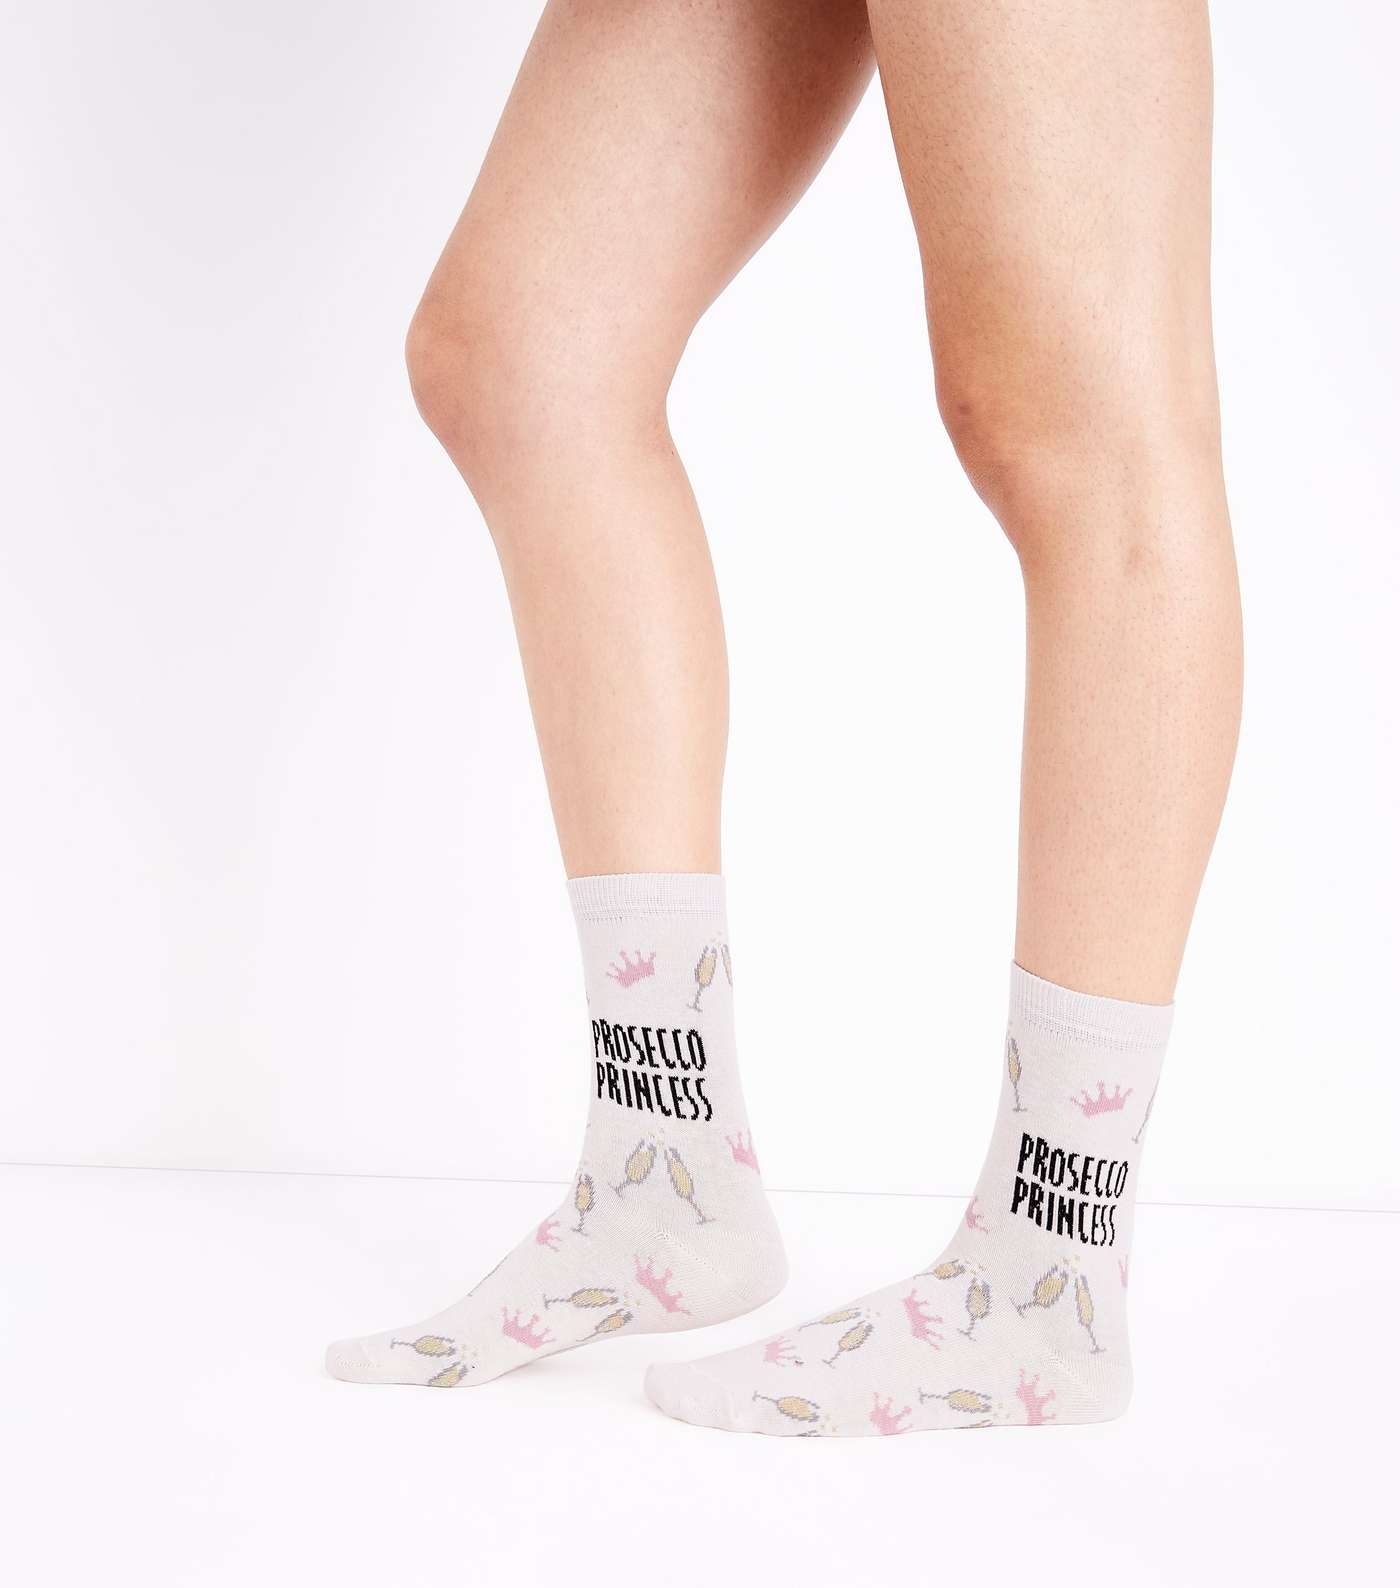 Stone Prosecco Princess Slogan Socks